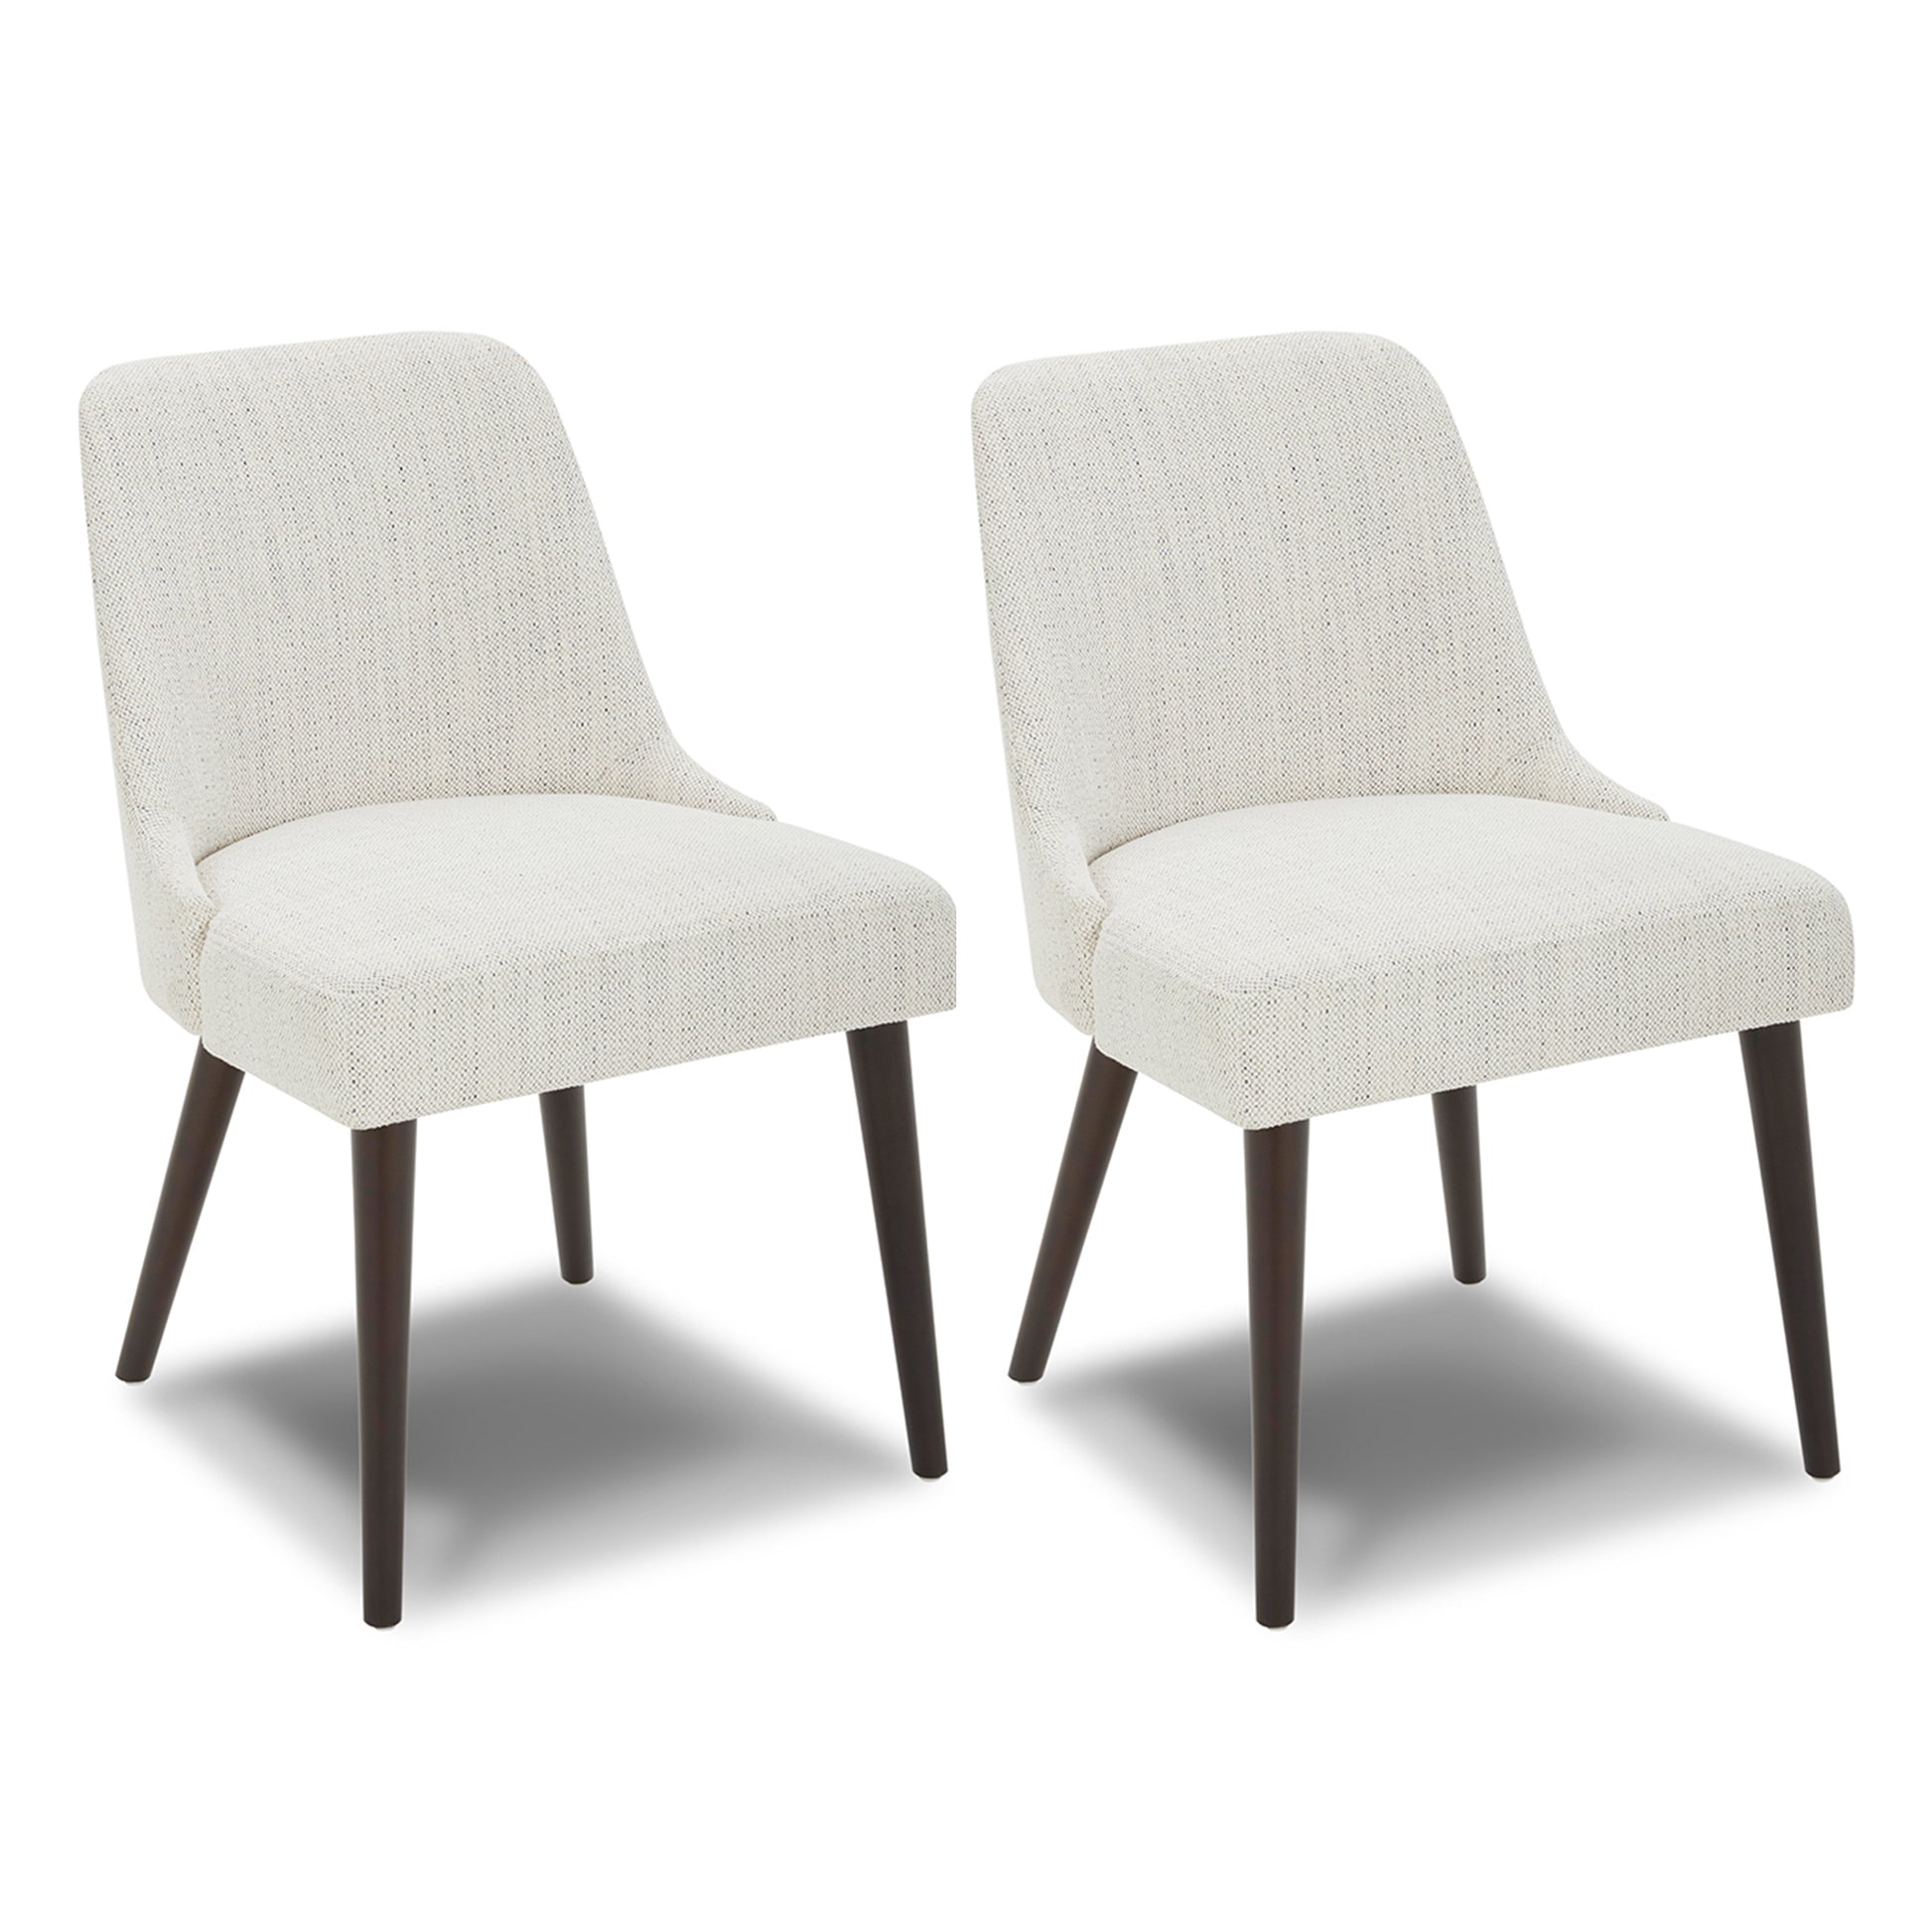 CHITA LIVING-Rhett Dining Chair (Set of 2)-Dining Chairs-Fabric-Ivory-